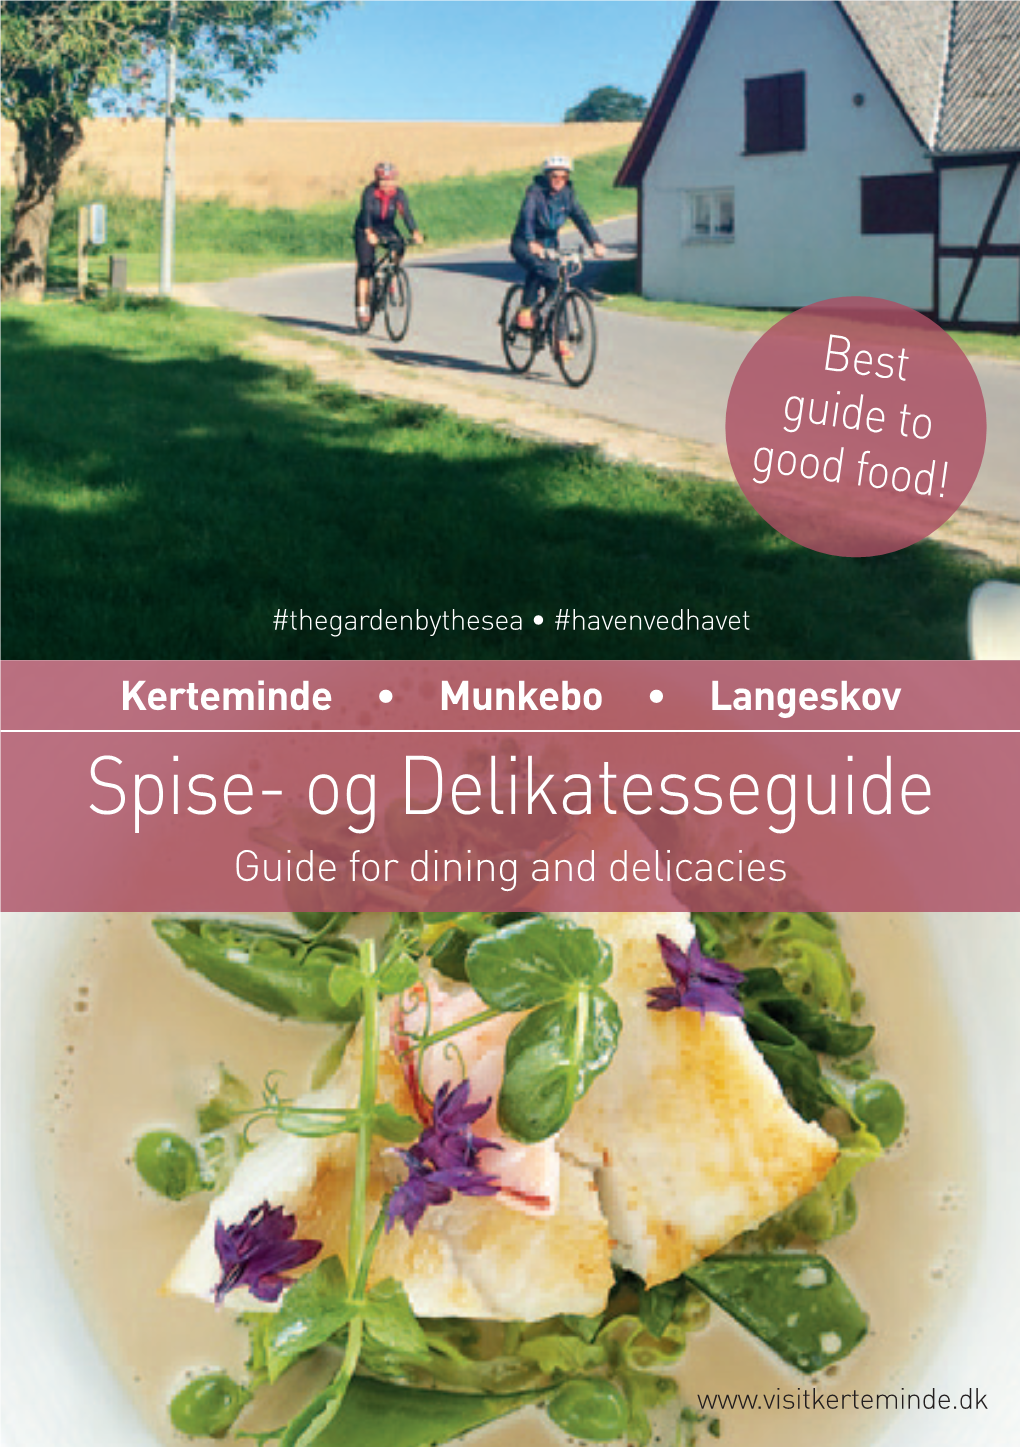 Spise- Og Delikatesseguide Guide for Dining and Delicacies